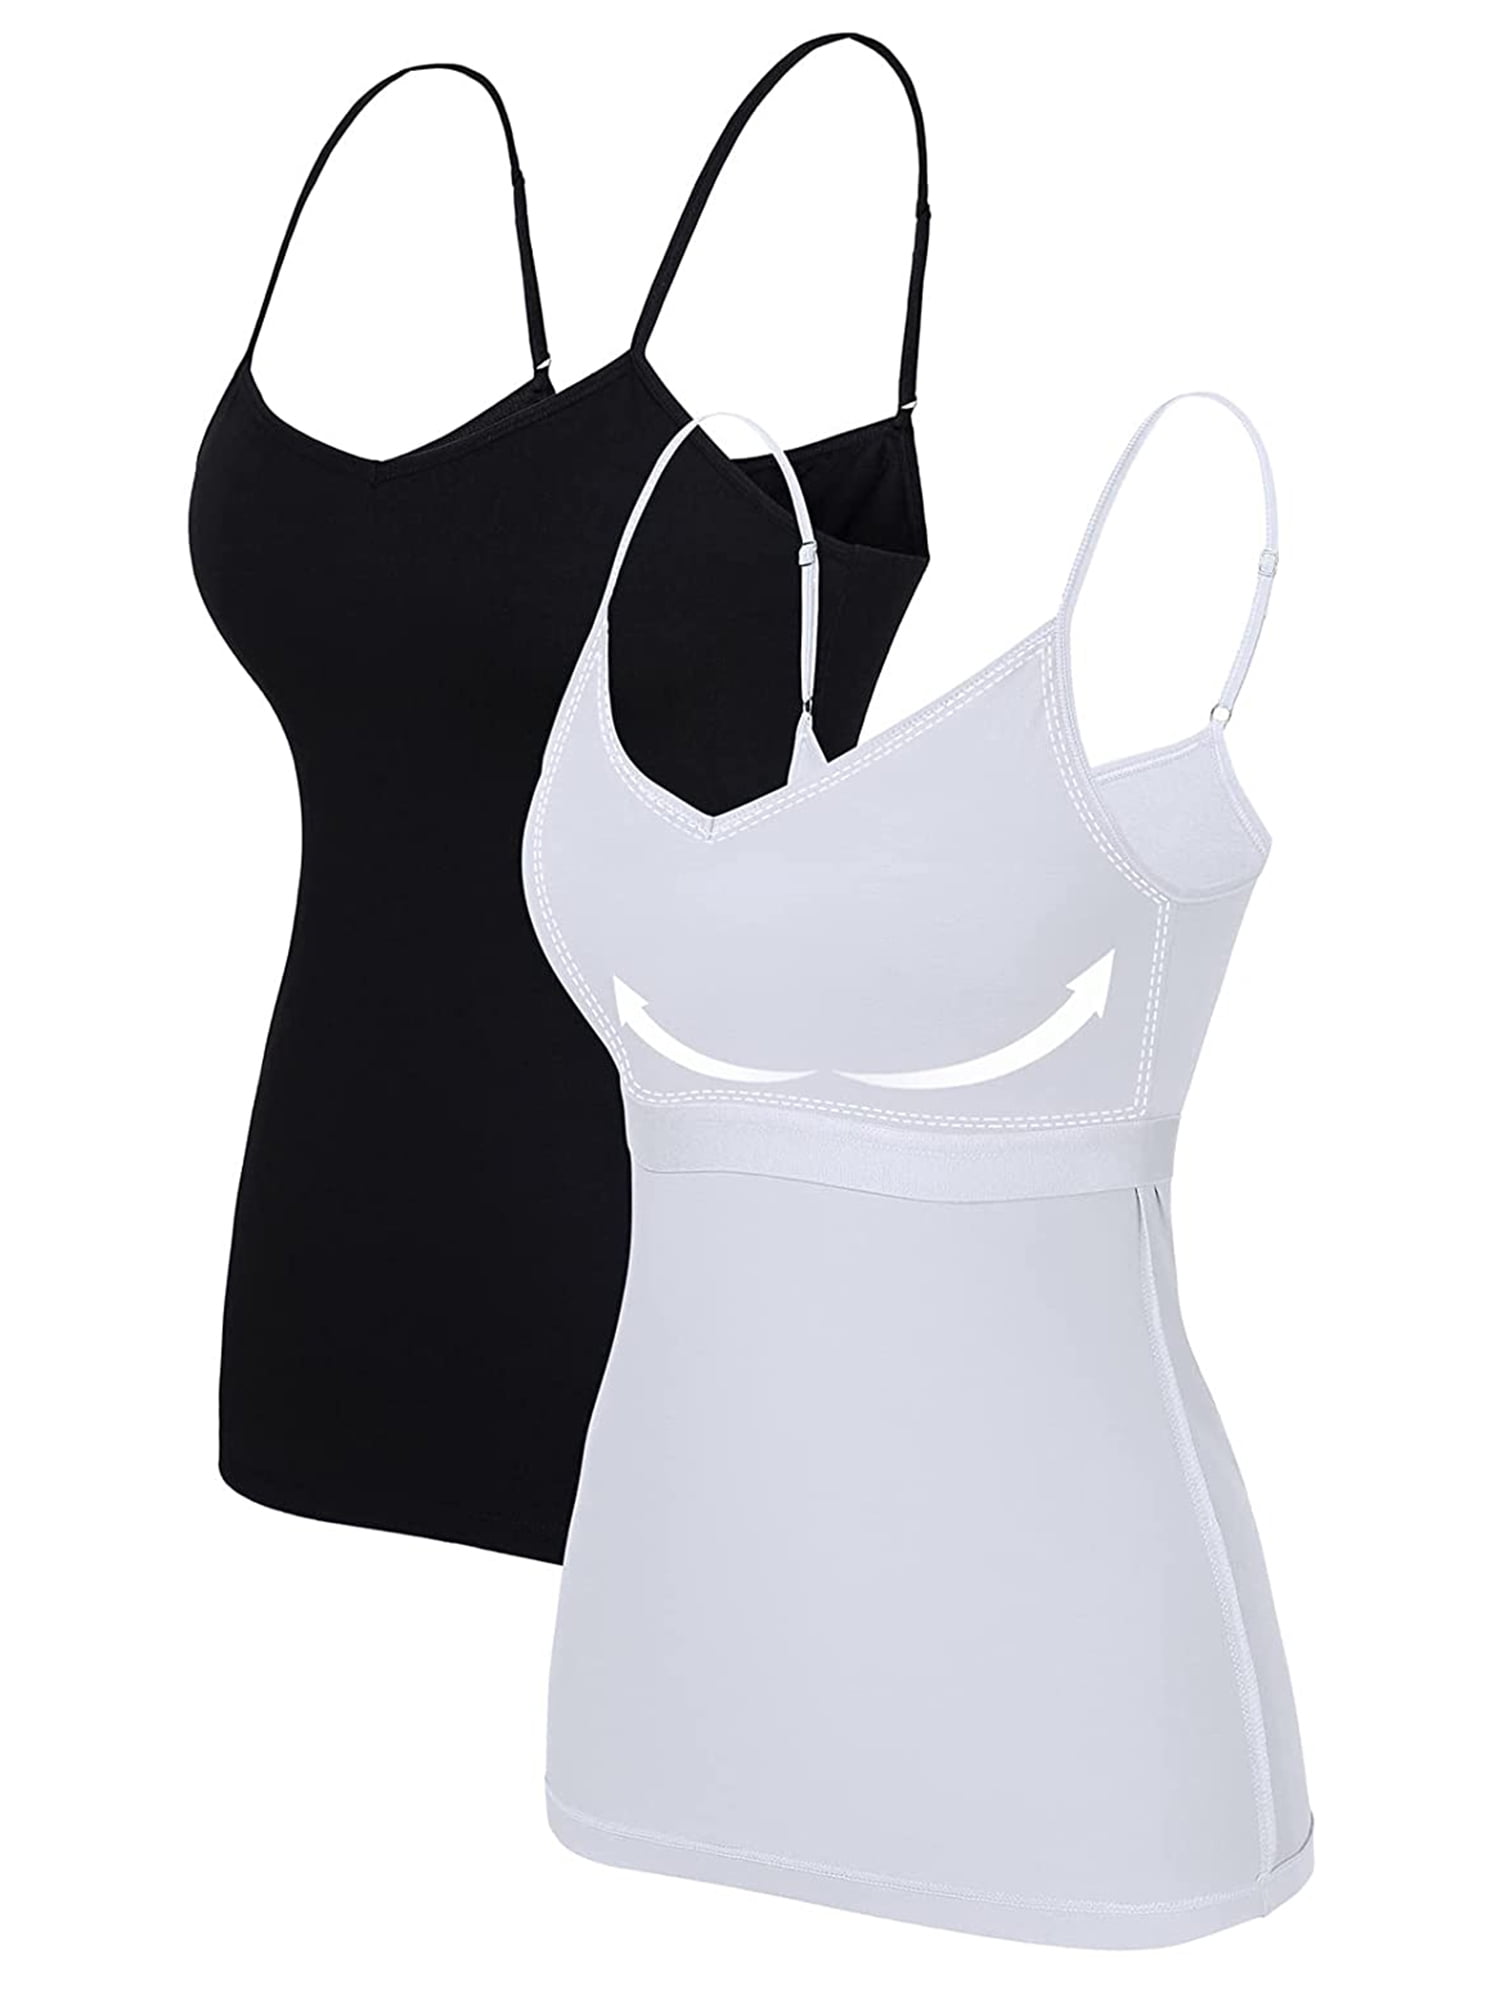 Women's Cotton Basic Camisoles with Shelf Bra Tank Tops